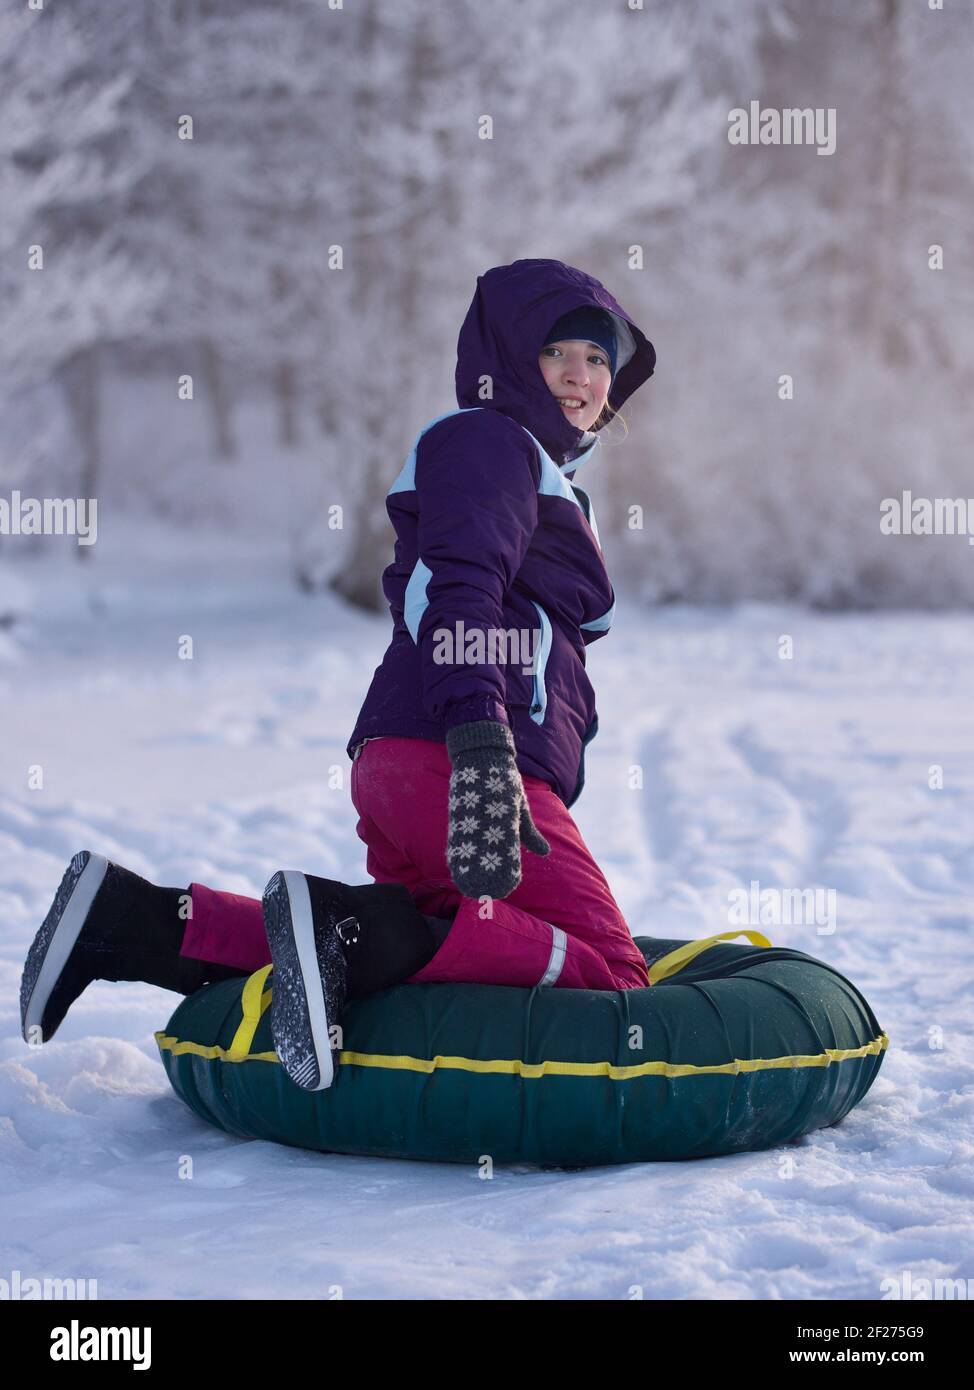 Smiling teen girl enjoying winter activity outdoors Stock Photo